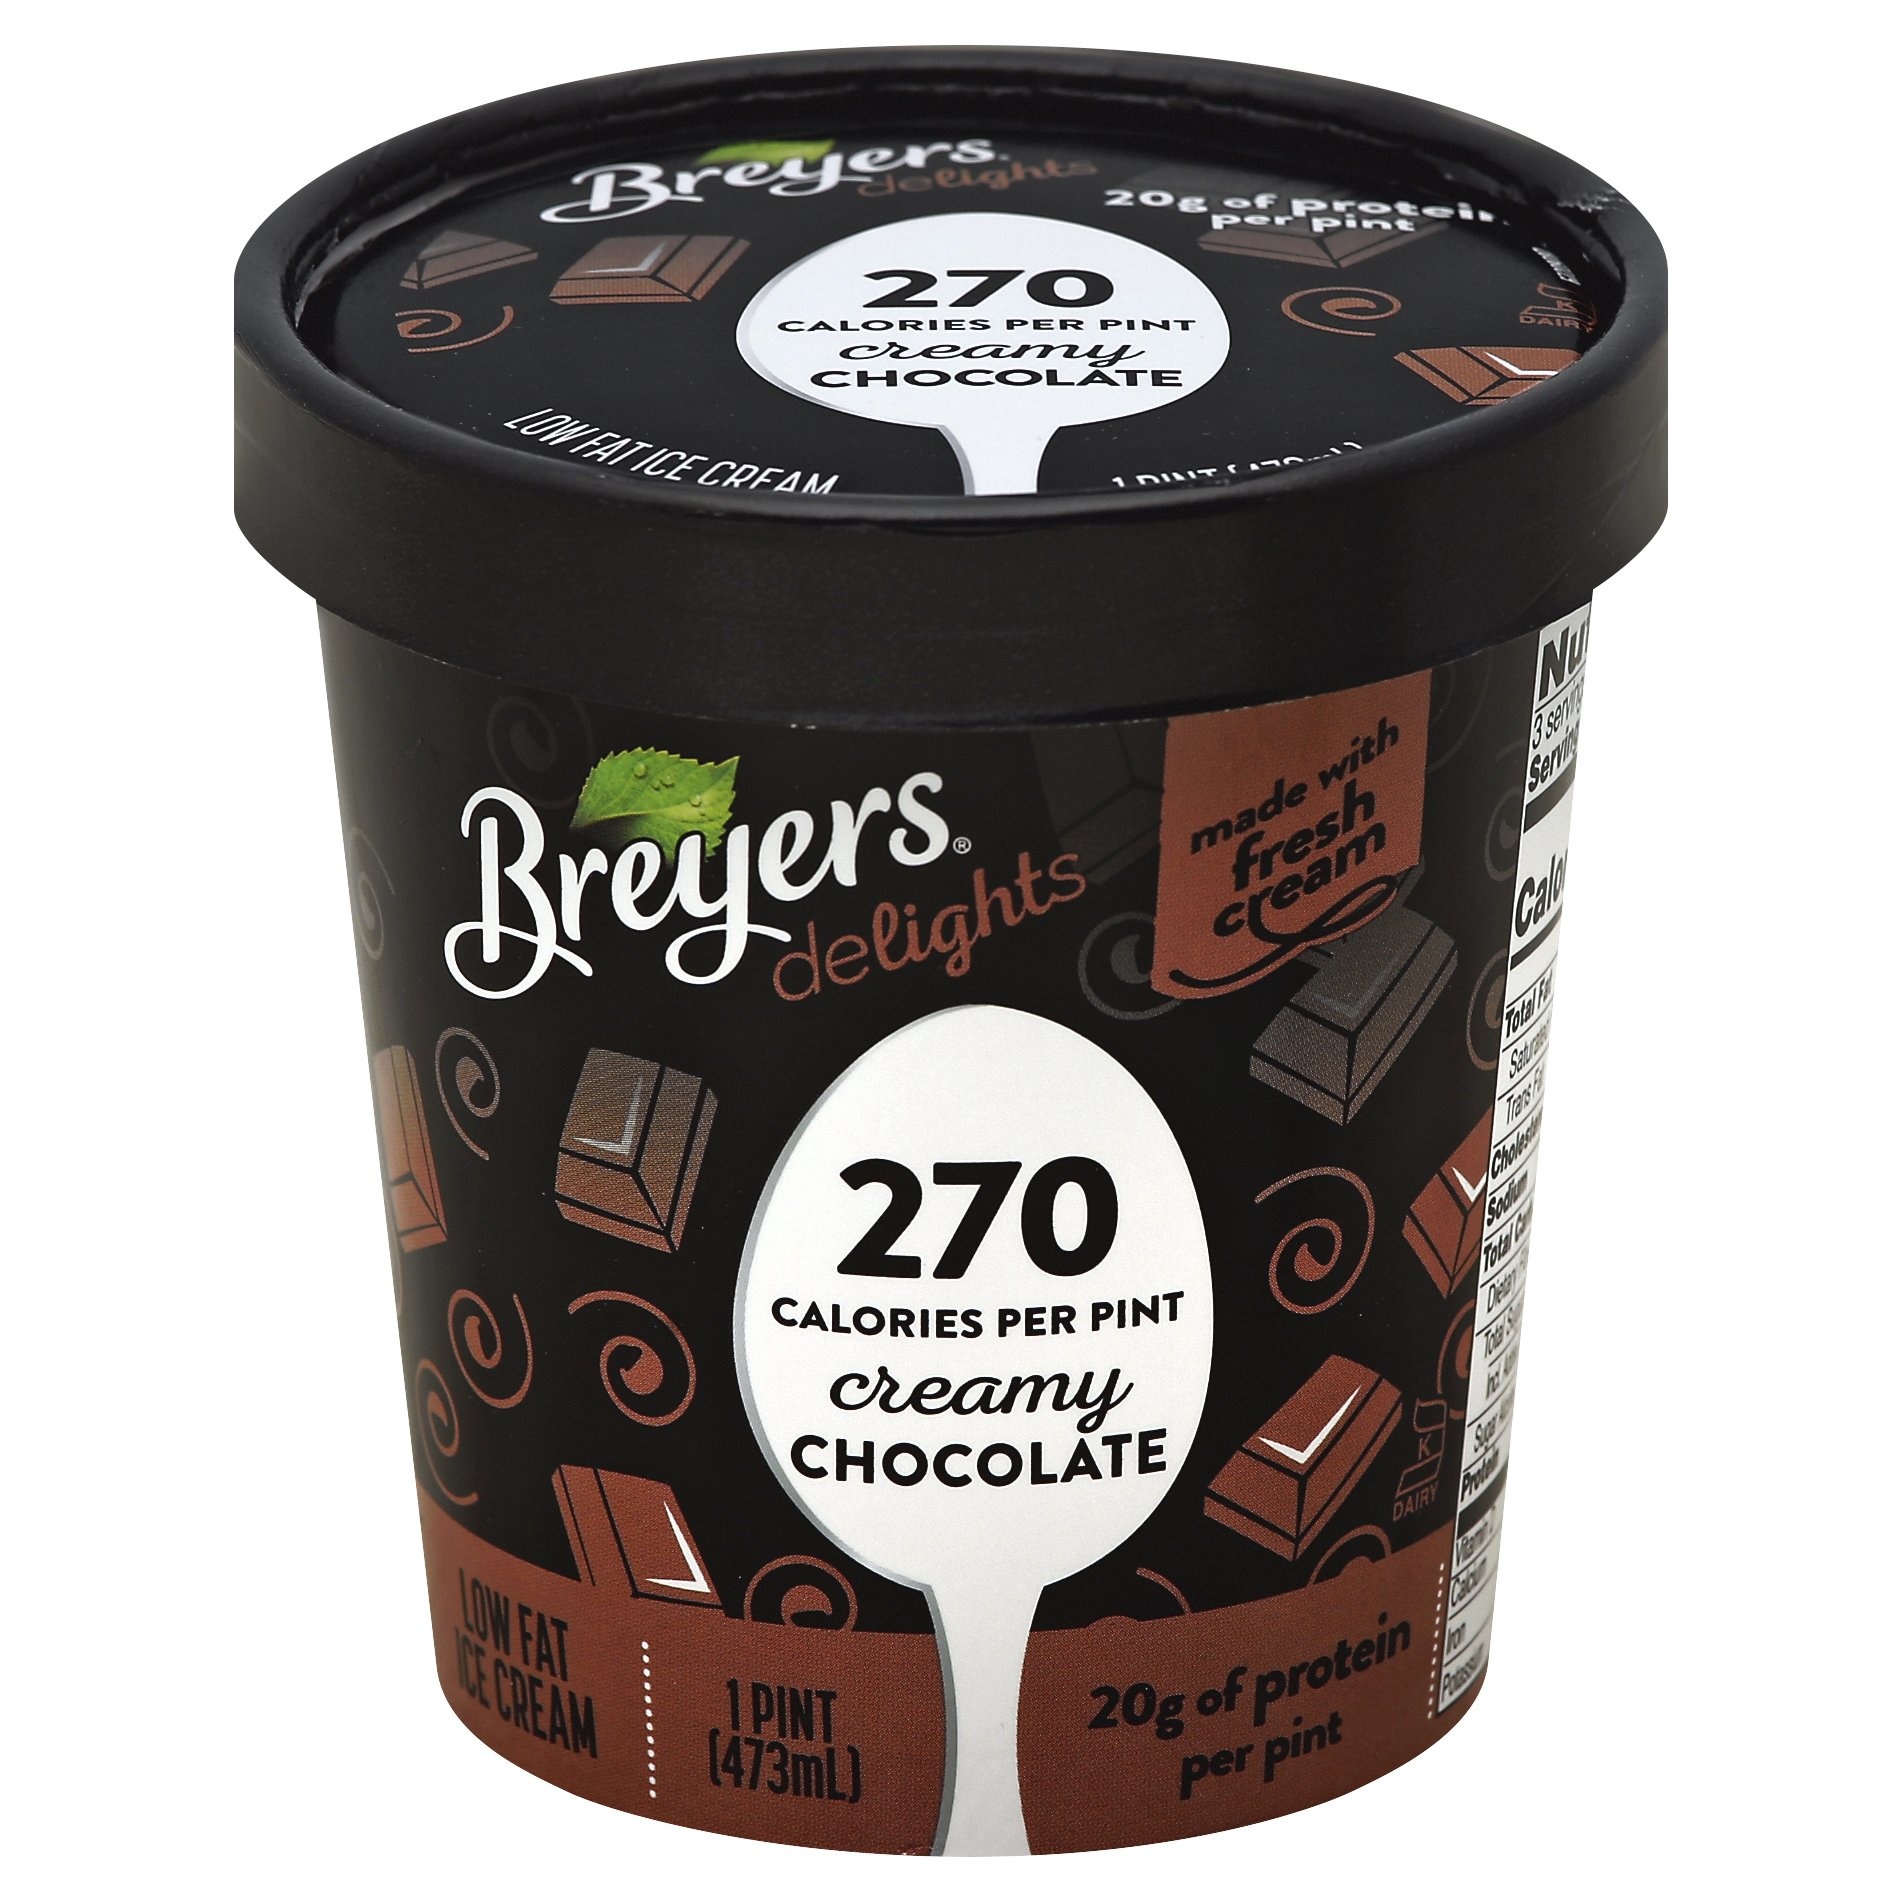 slide 1 of 2, Breyers Delights Creamy Chocolate Ice Cream, 1 pint